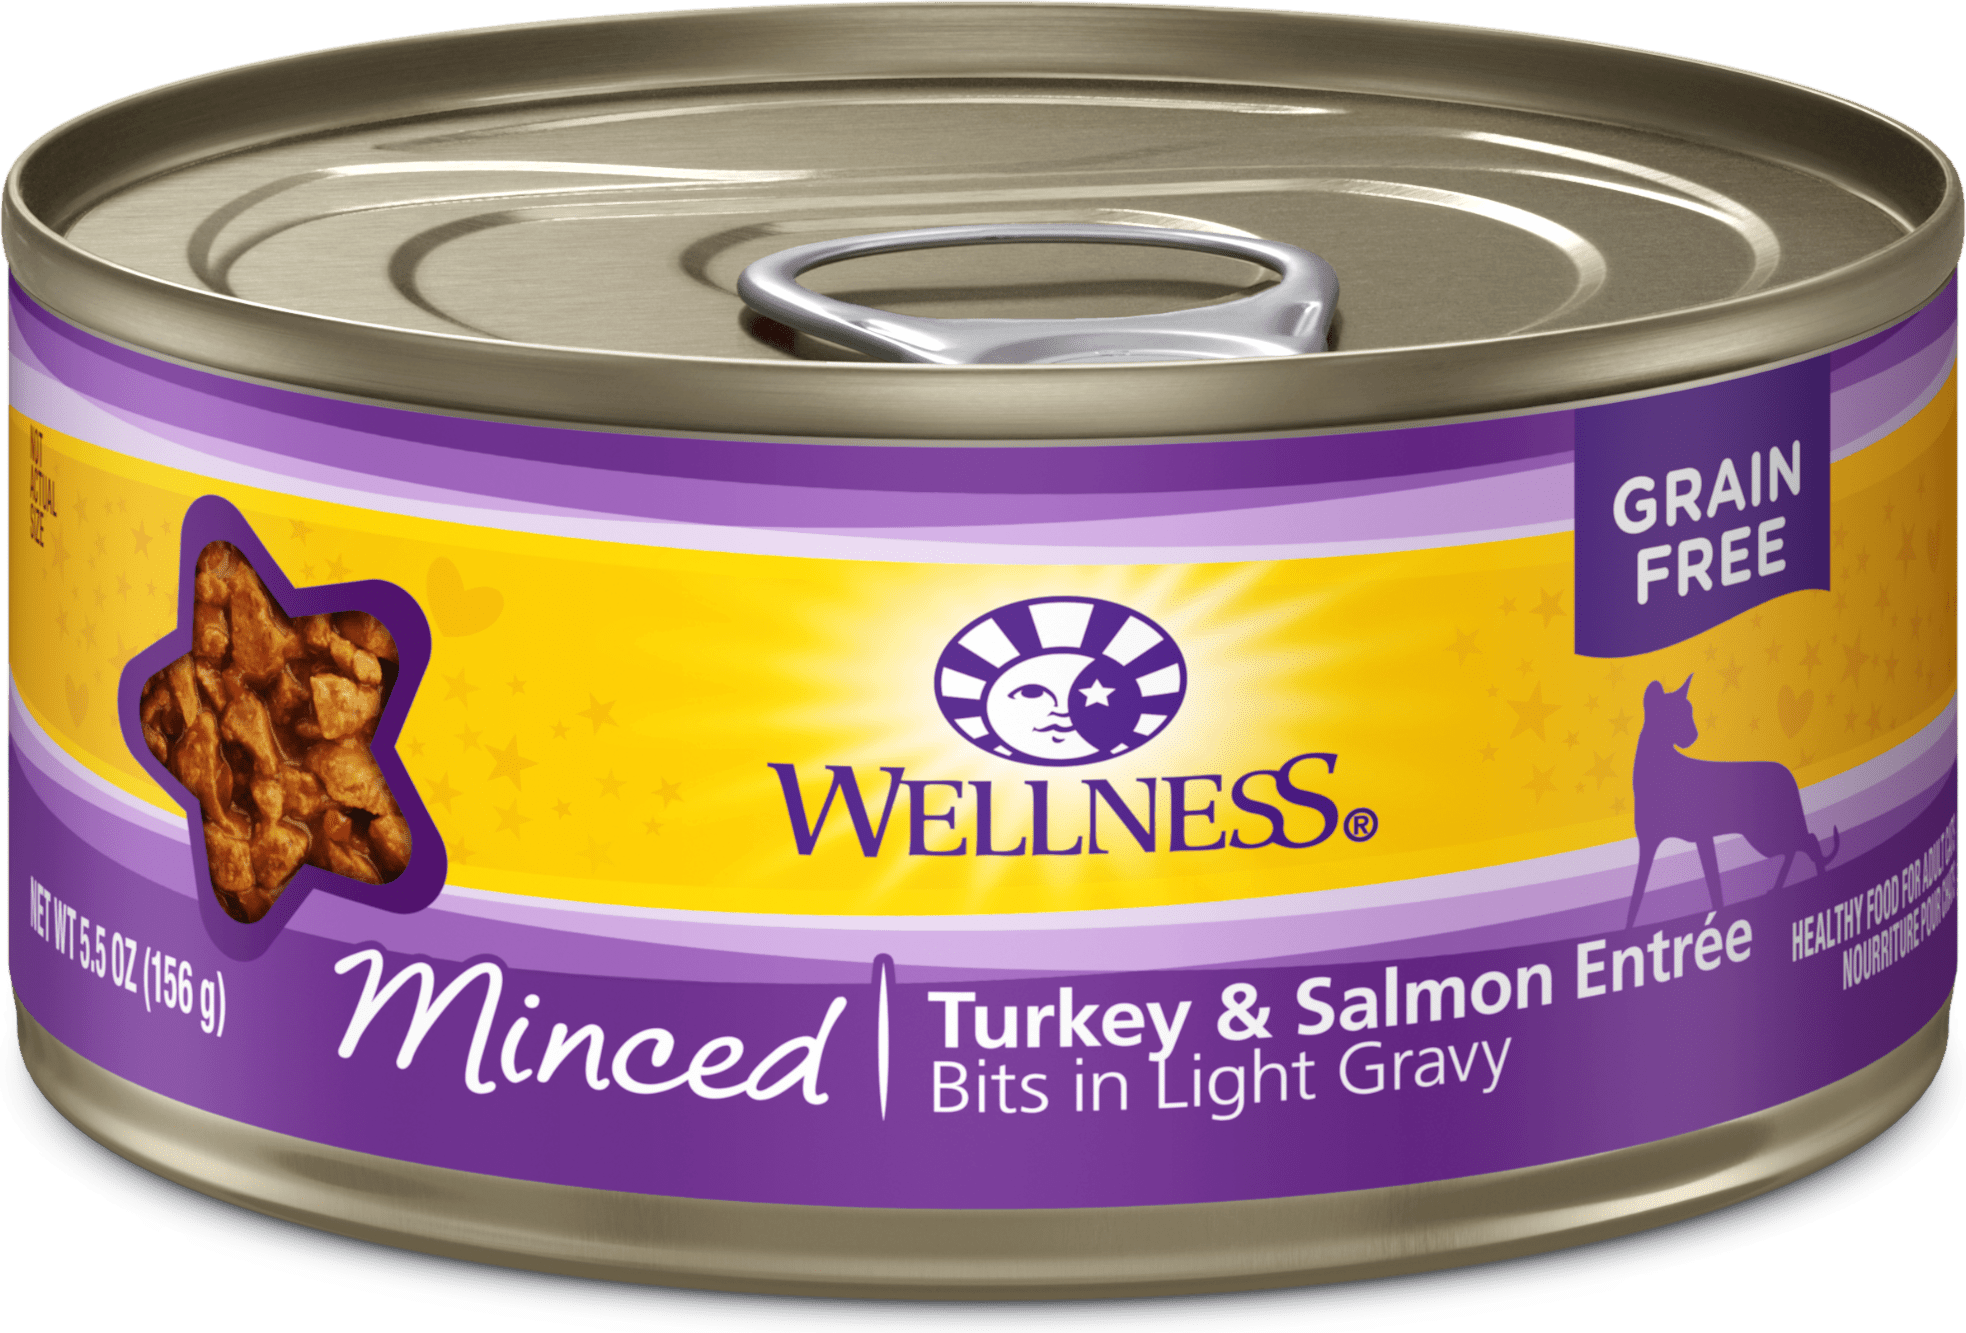 Wellness Complete Health Minced Turkey & Salmon Entre Turkey & Salmon Entrée